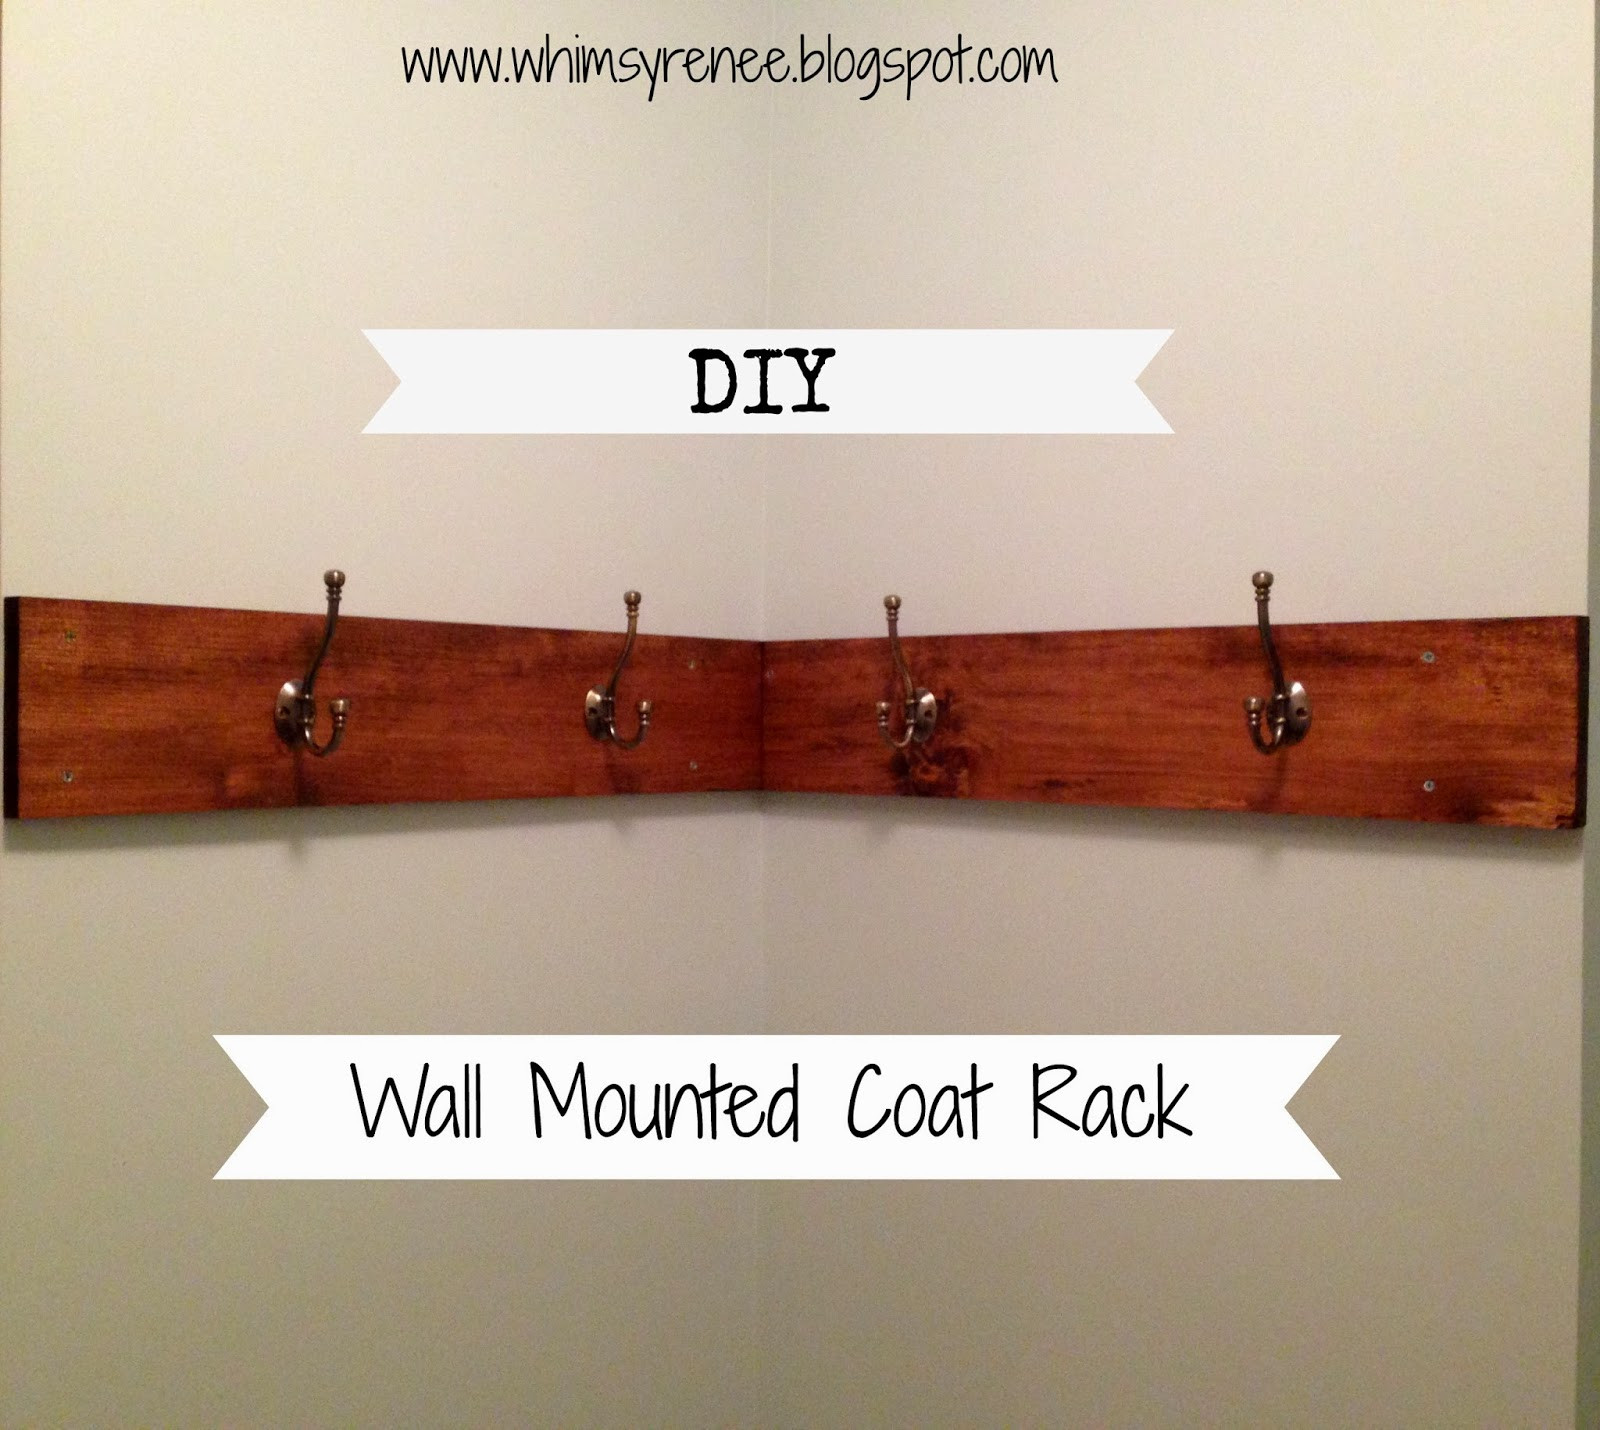 DIY Wall Coat Rack
 Whimsy Renee DIY Wall Mounted Coat Rack